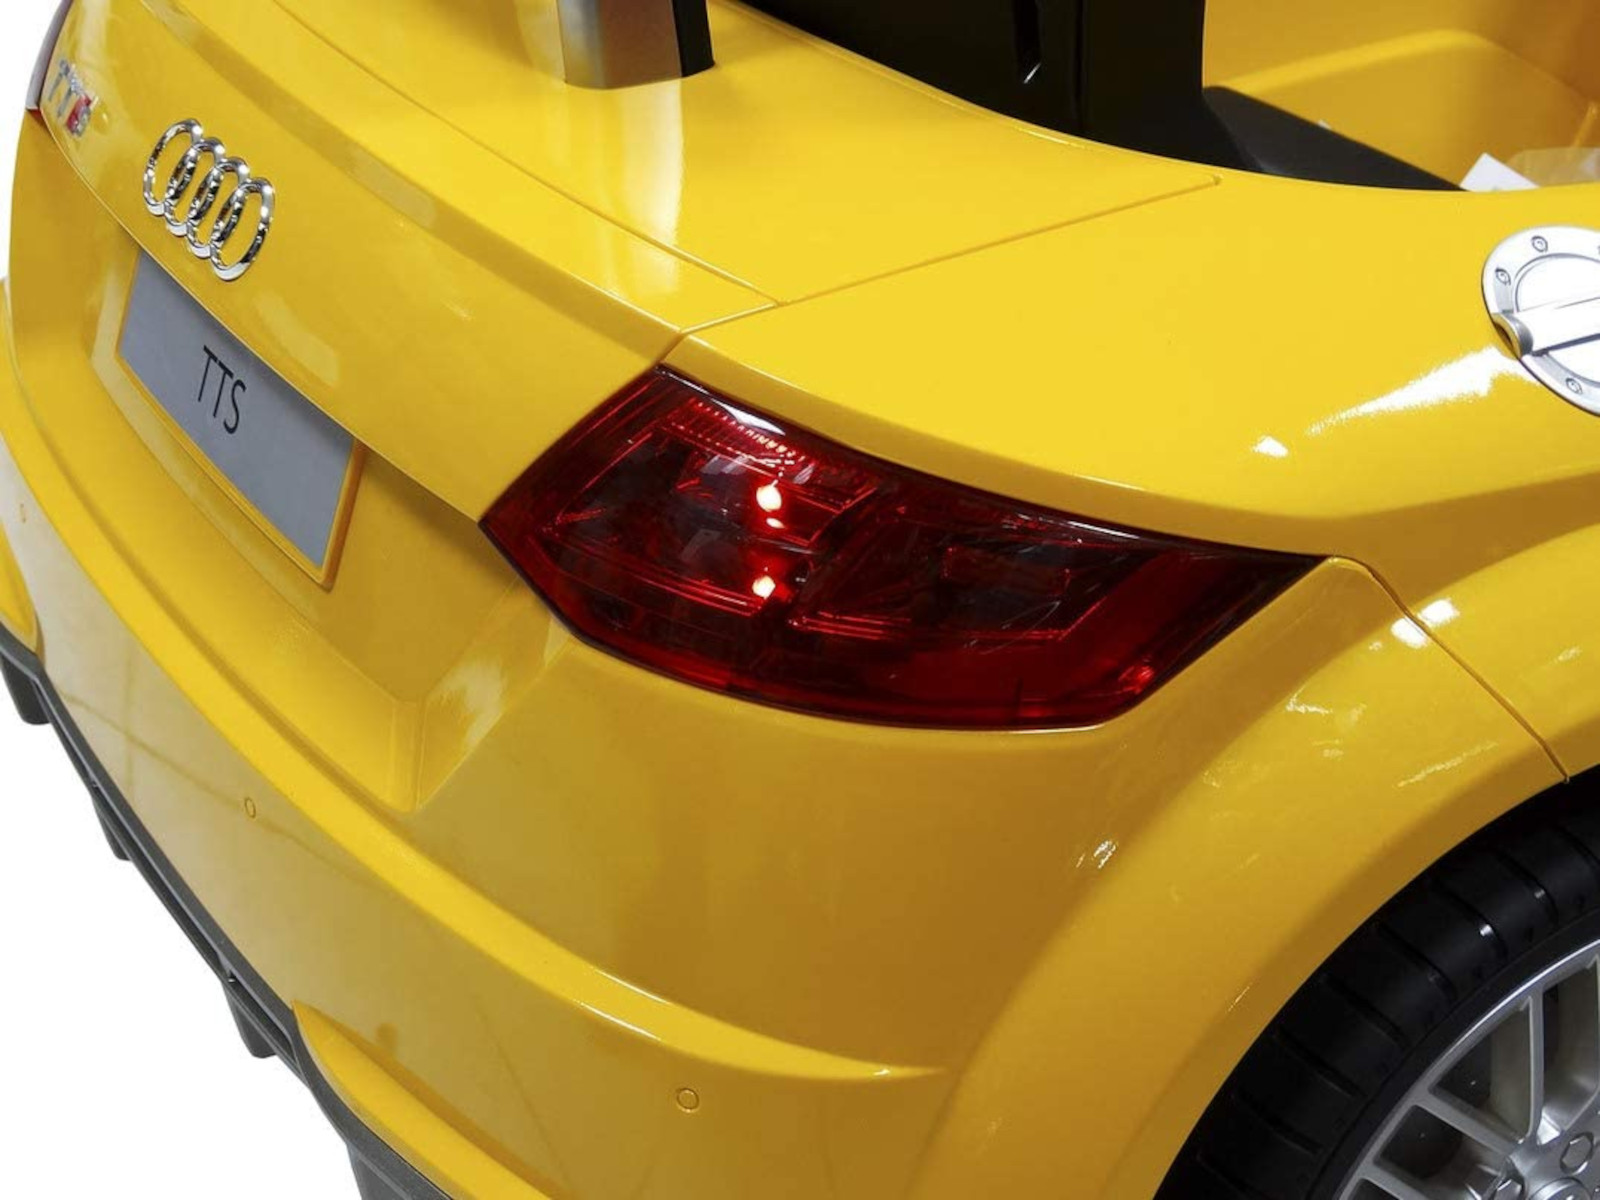 RASTAR Ride-On Roadster Elektroauto Audi Spielzeugfahrzeug Kinder - TTS für (gelb)